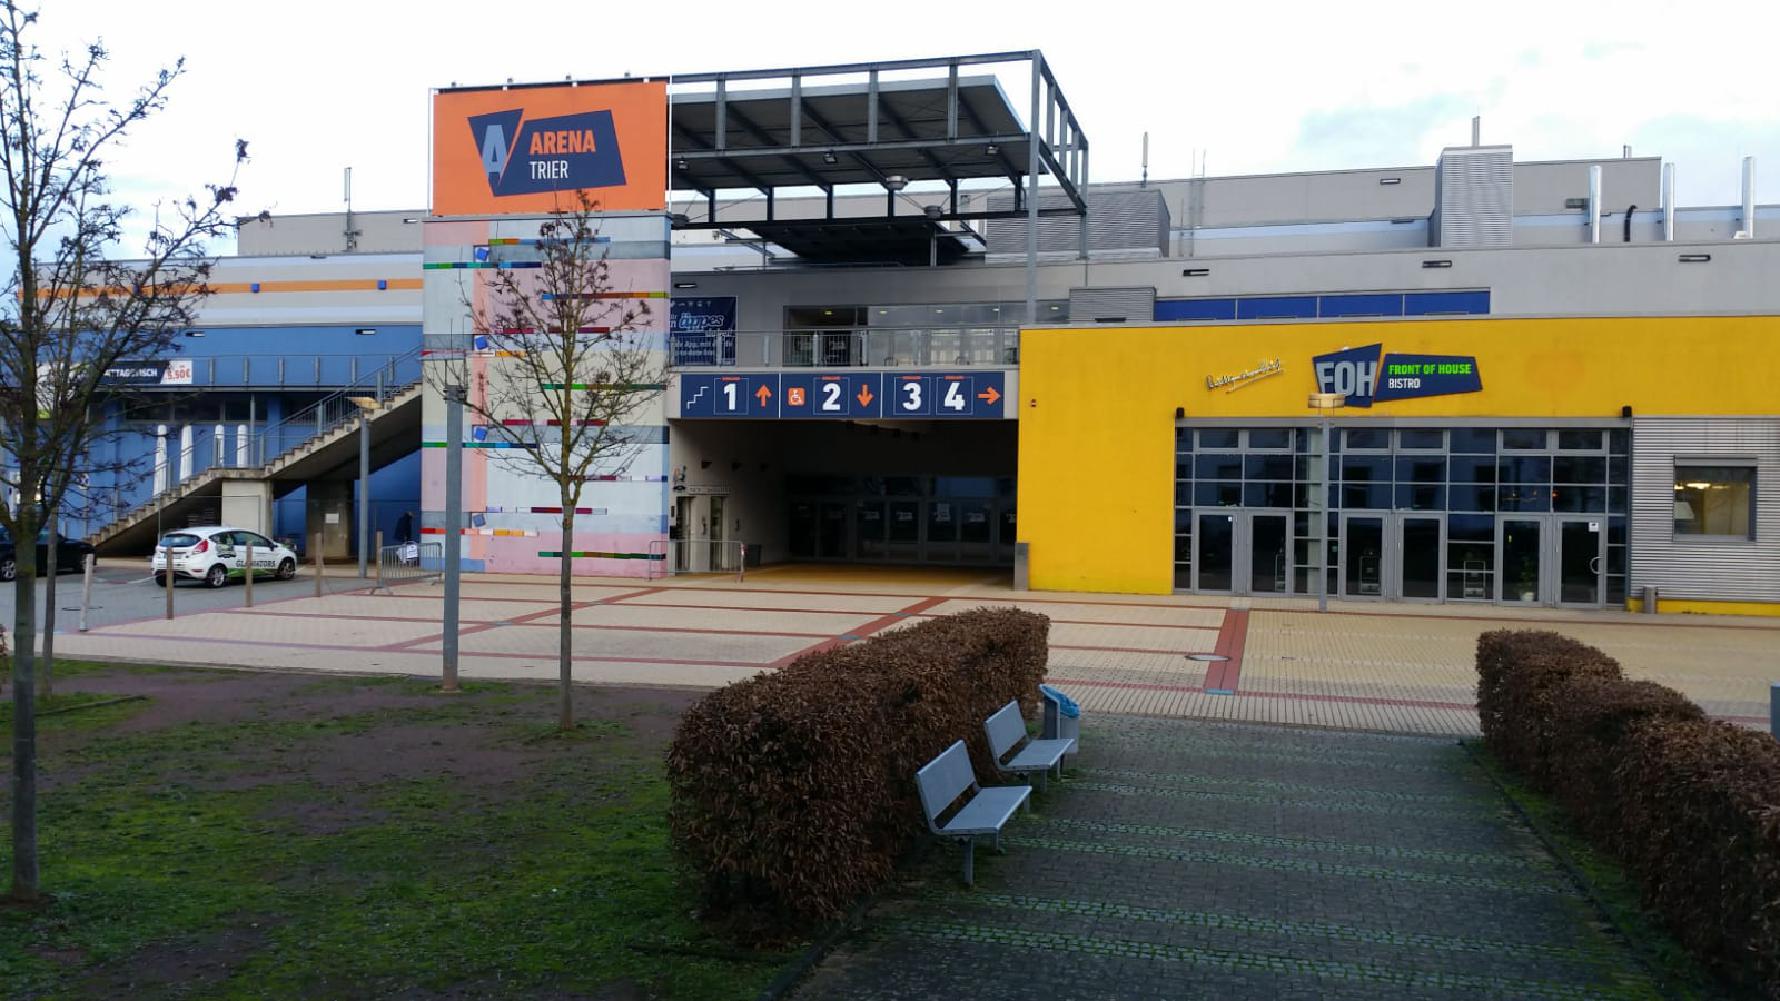 Arena Trier